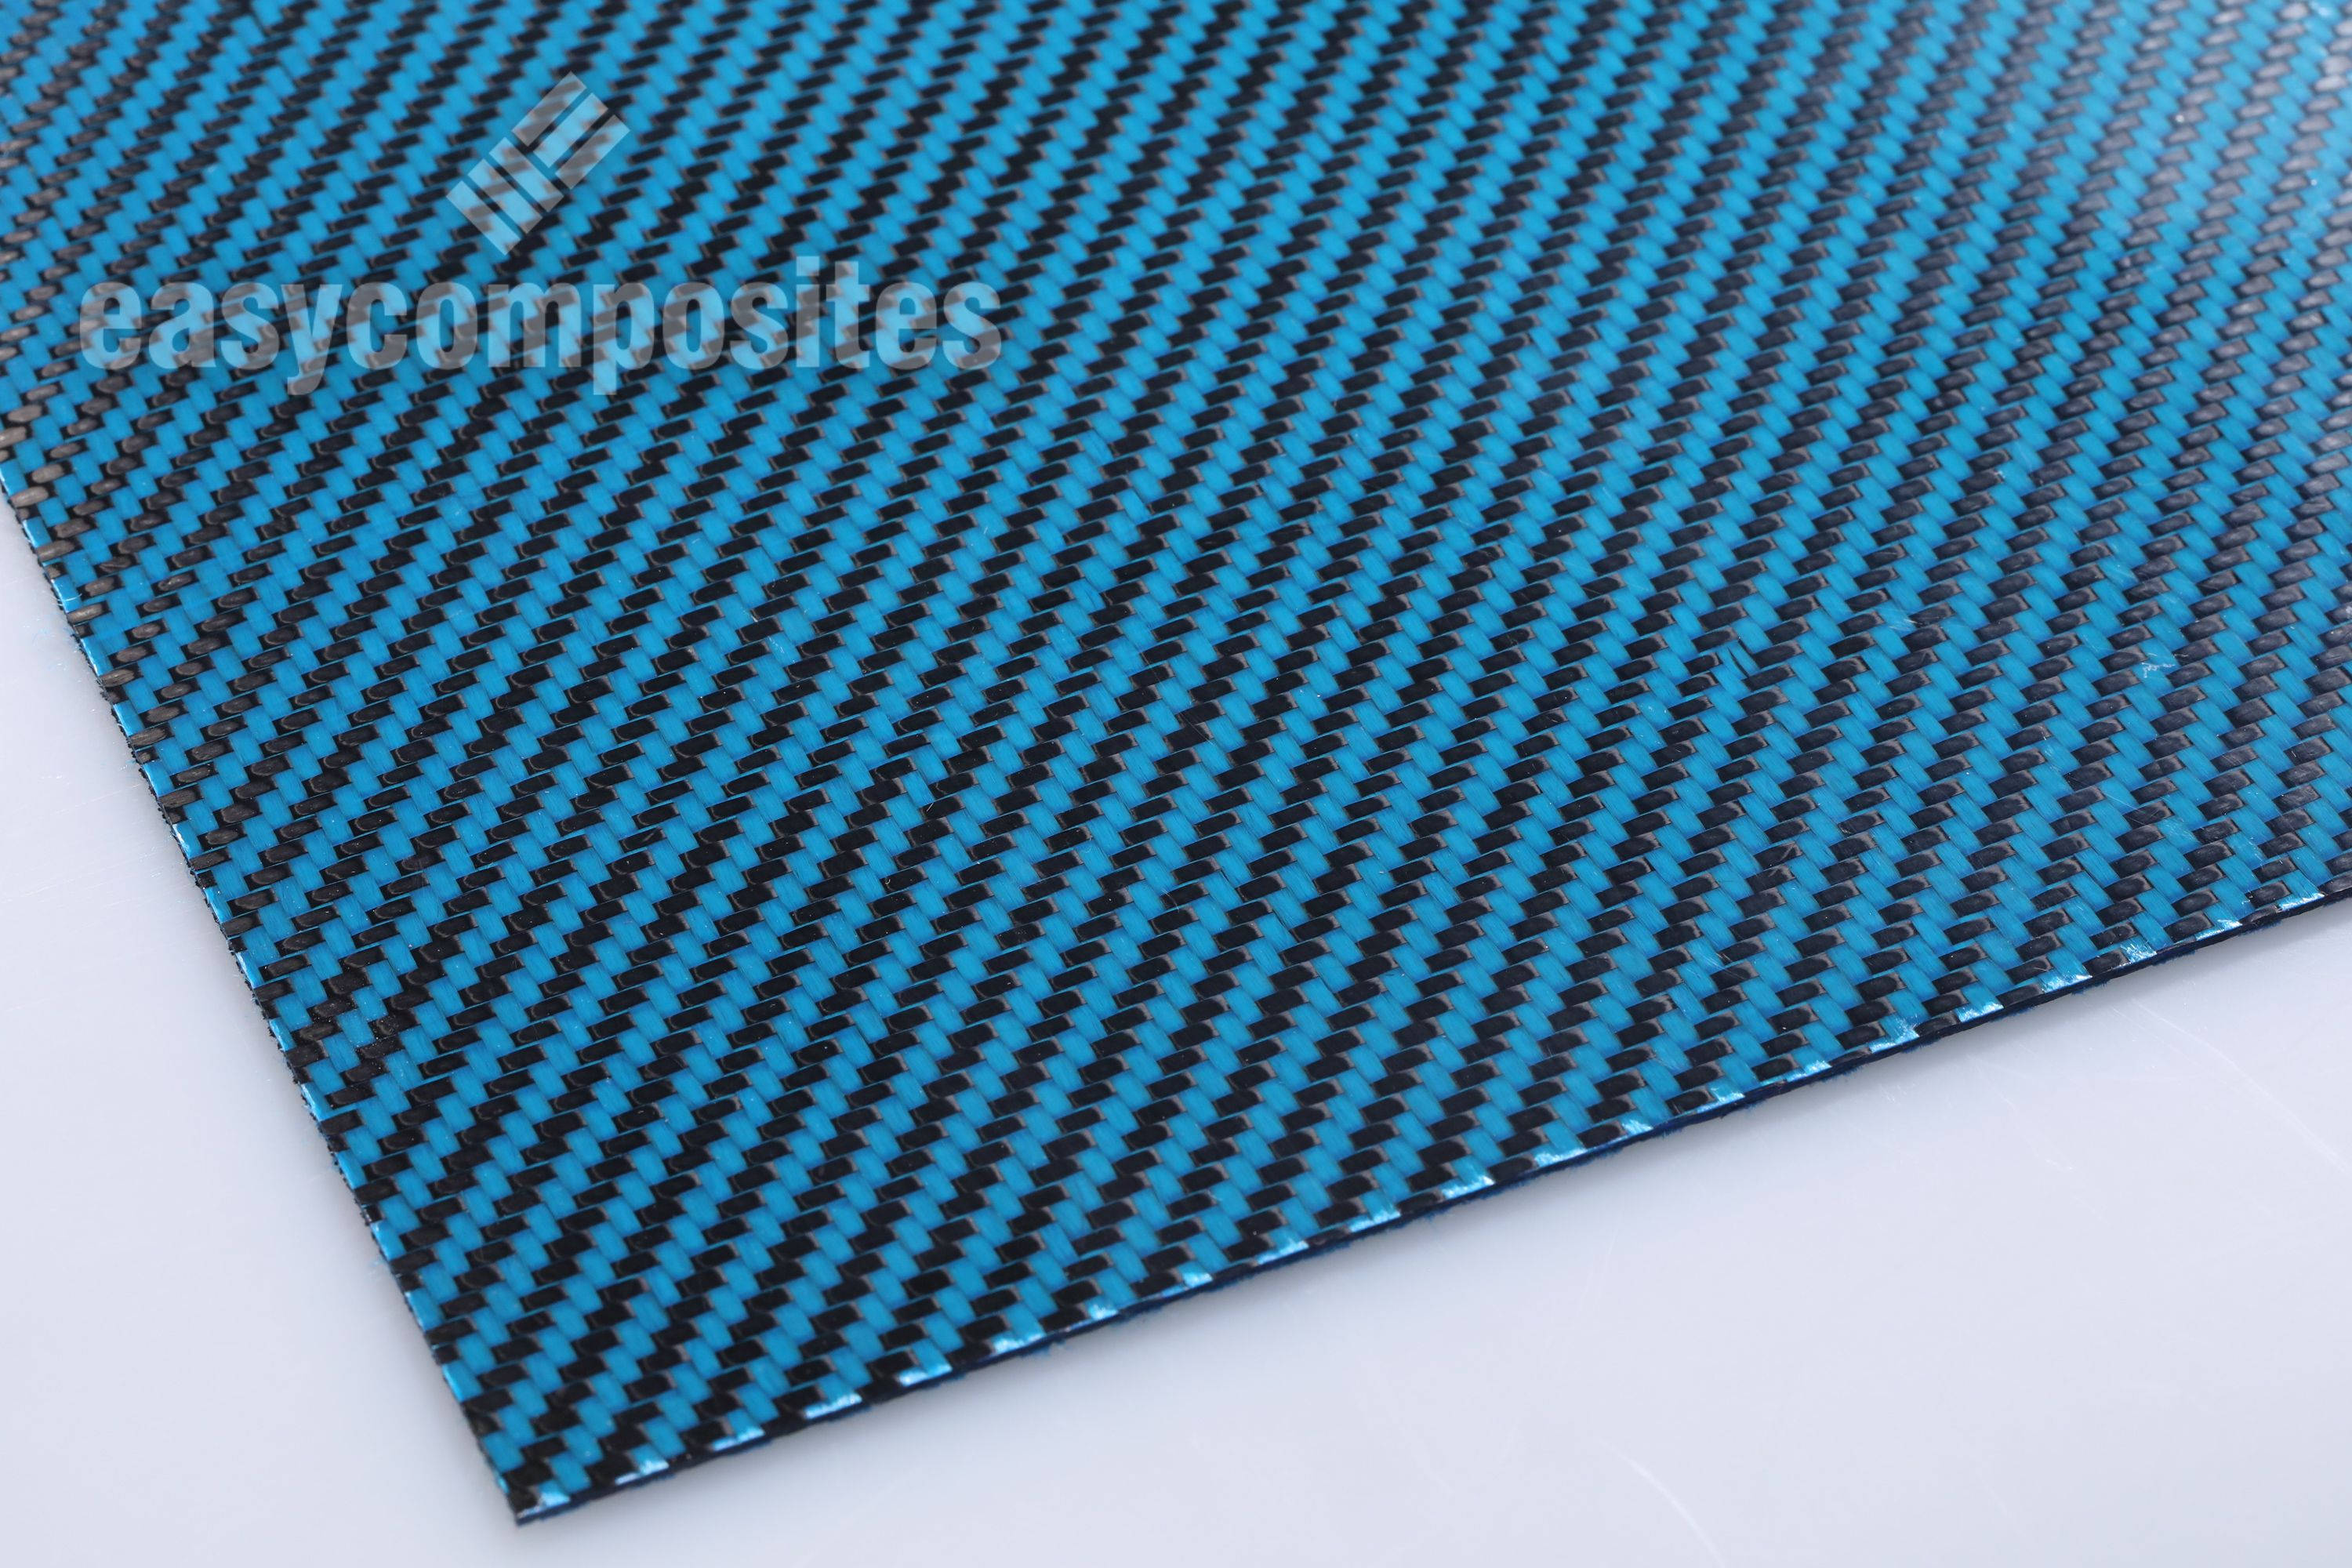 50 x 180 Blue Reflections Carbon Fiber Fabric 2x2 Twill 3k 50/127cm 5.9oz/200gsm 